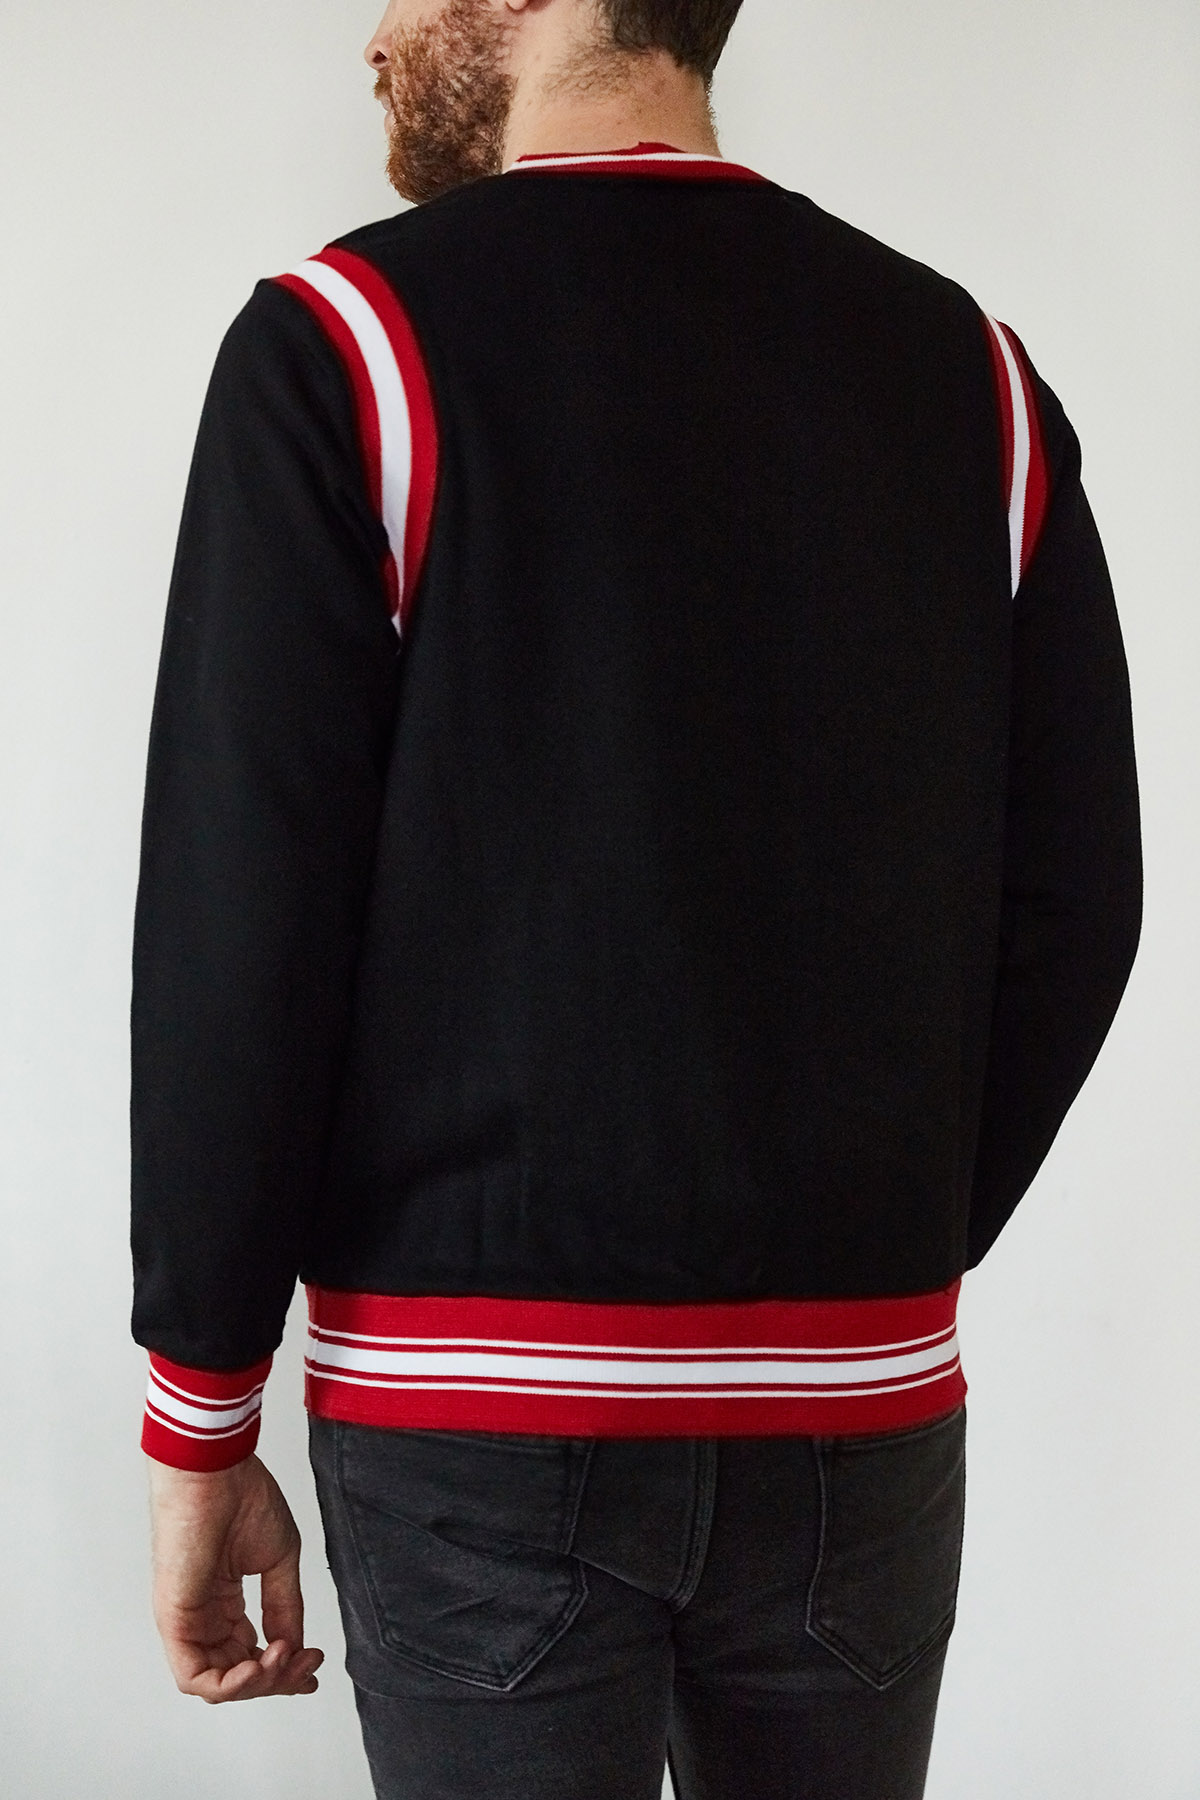 Siyah & Kırmızı Şeritli Bisiklet Yaka Sweatshirt 1KXE8-44164-02 - 2